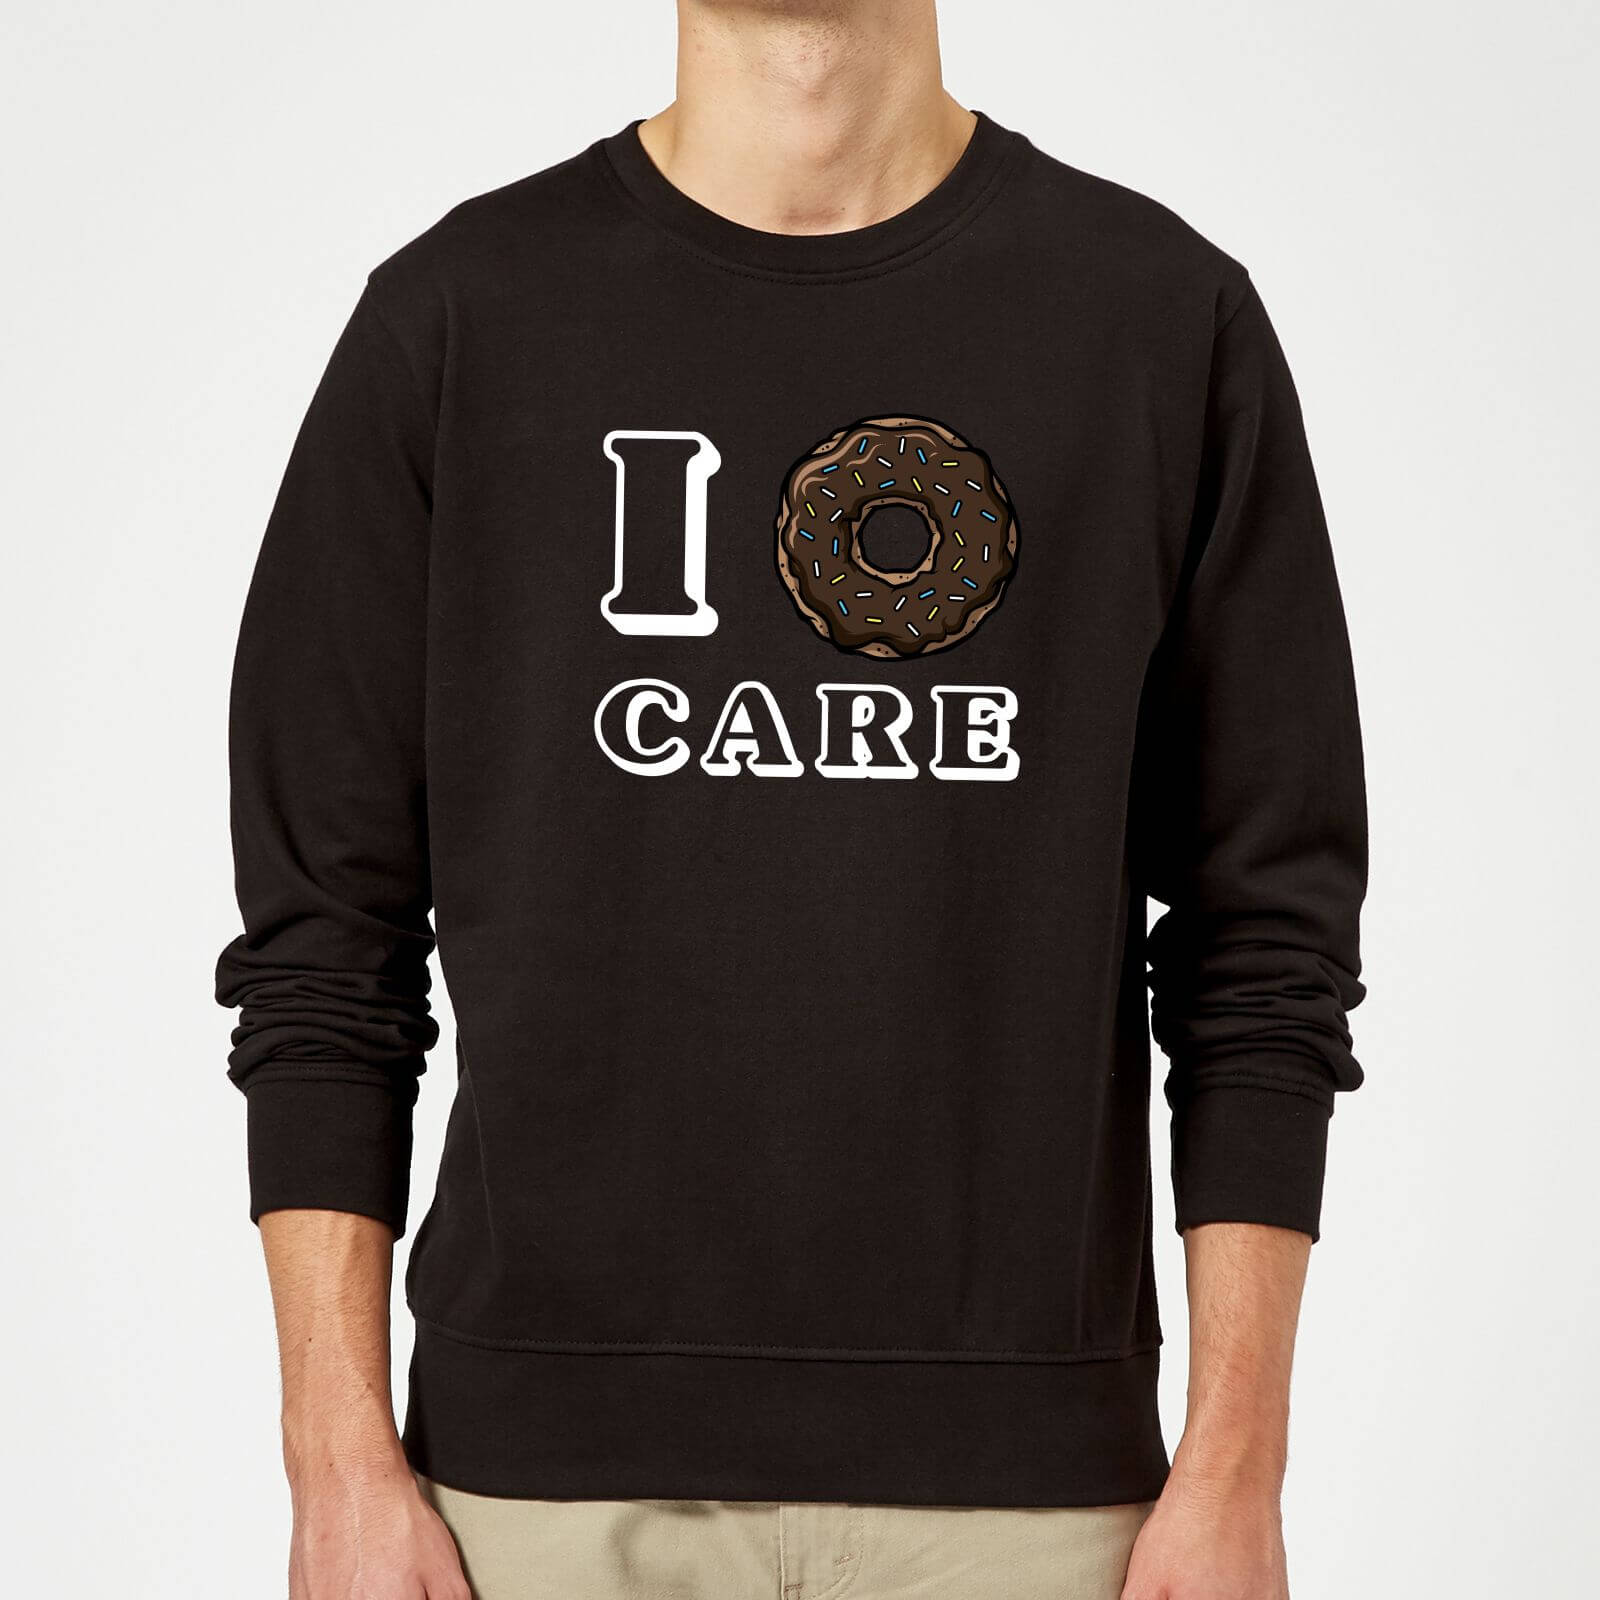 I Donut Care Slogan Sweatshirt - Black - S - Black